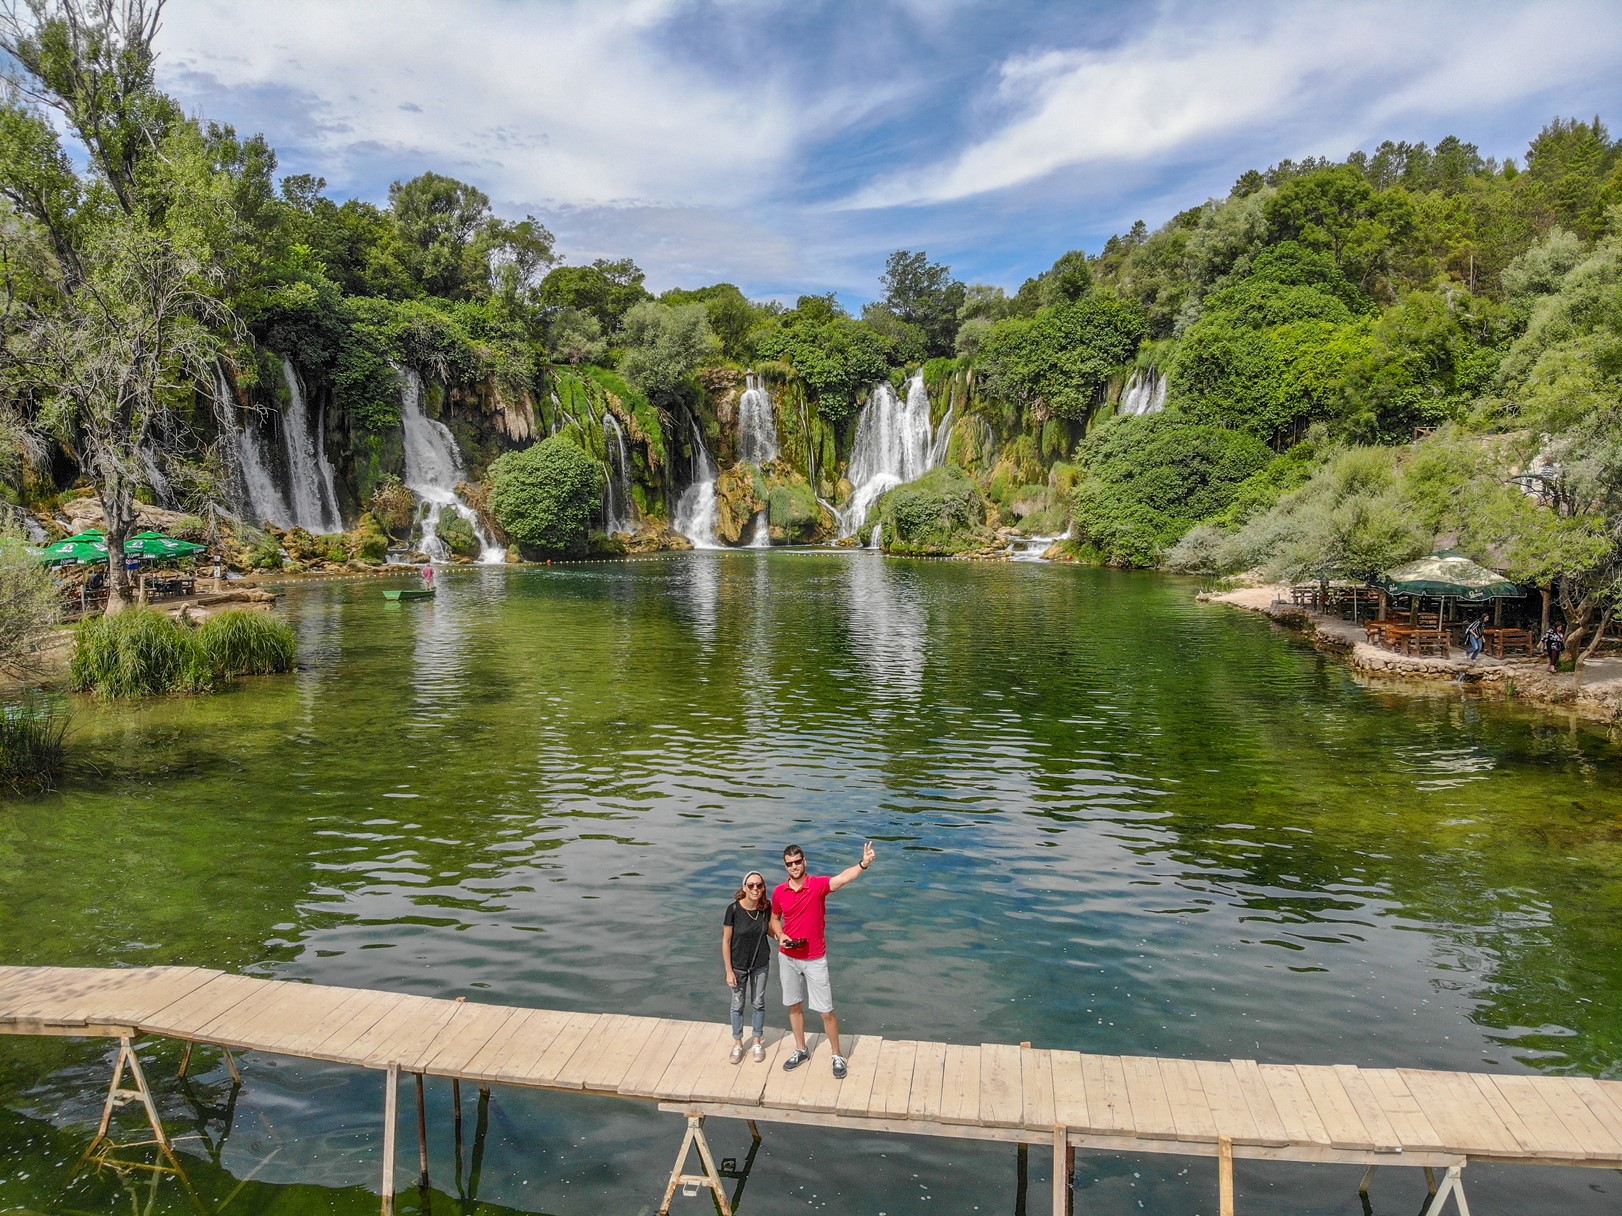 Kravice waterfalls in Bosnia and Herzegovina